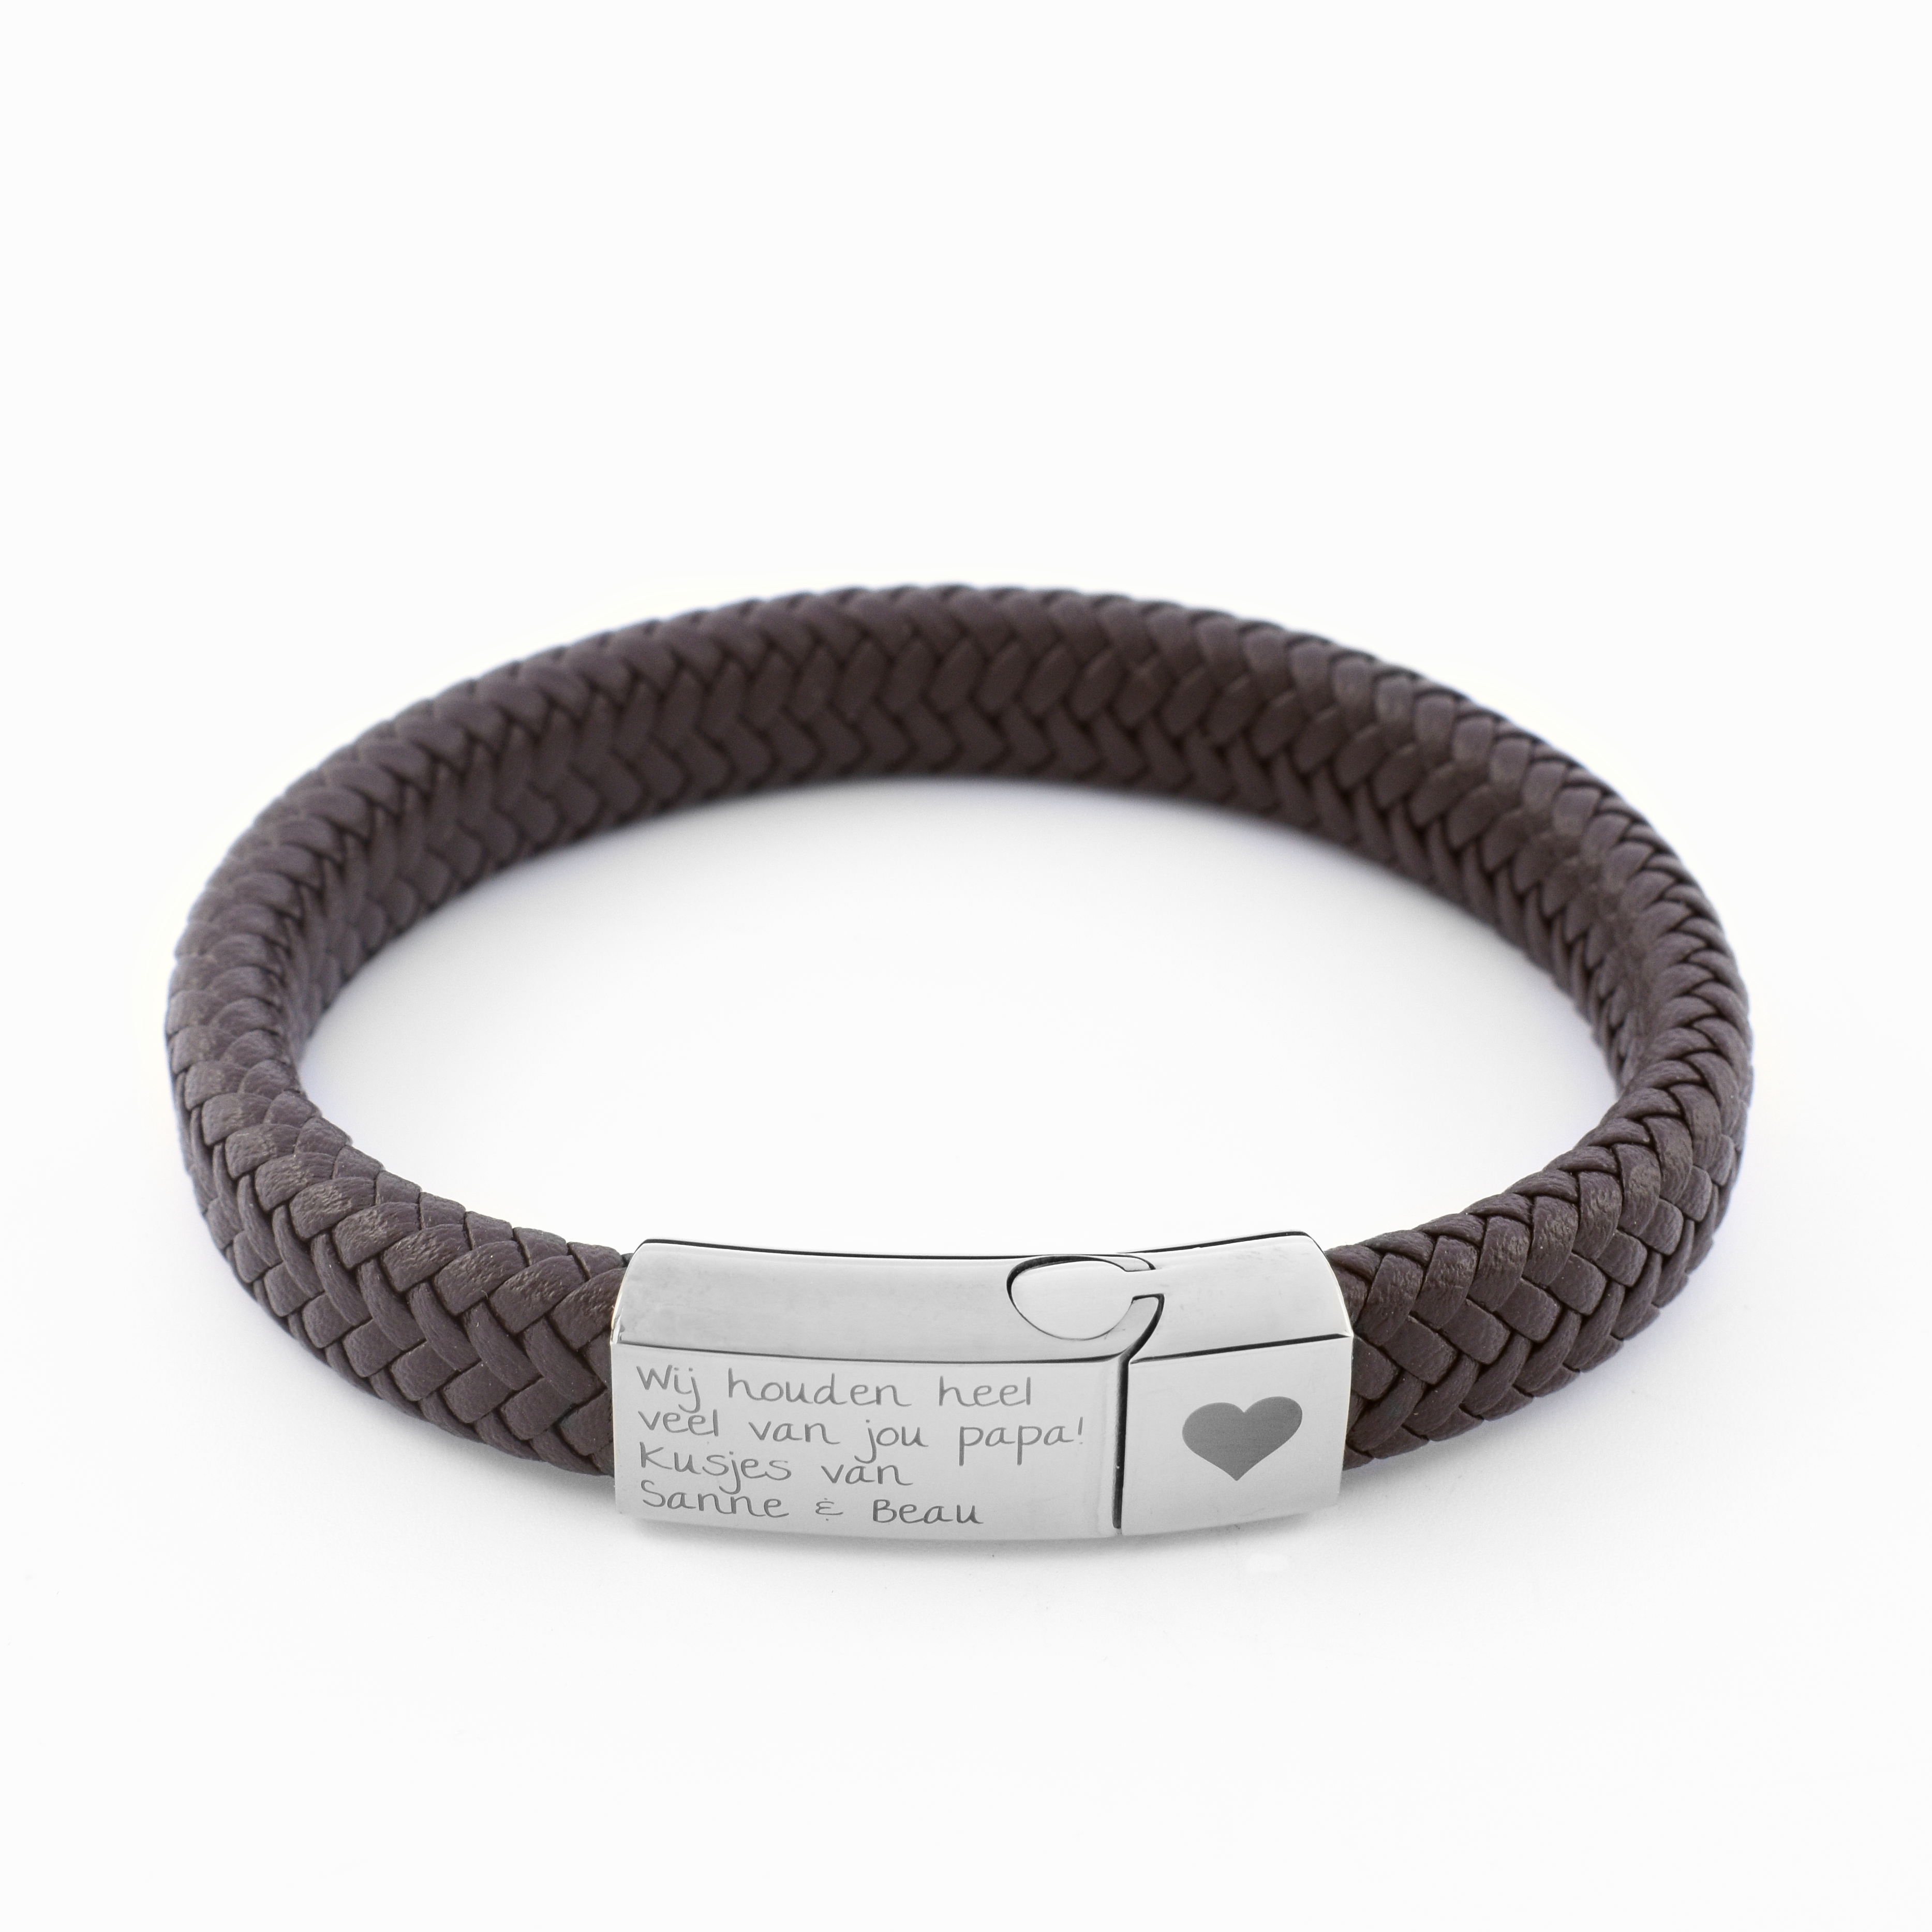 Braided bracelet leather men's brown